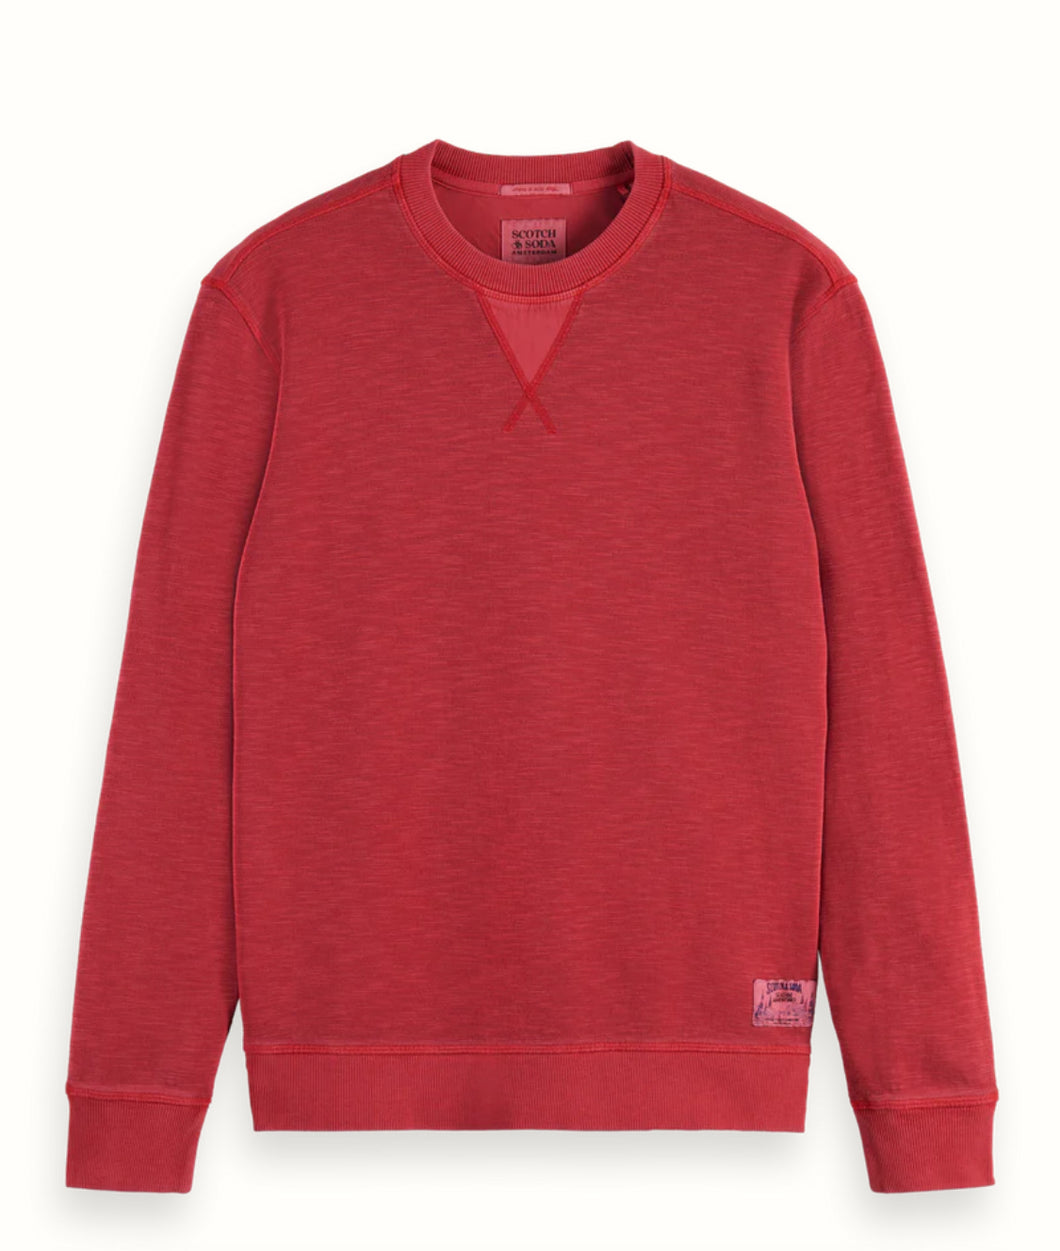 SCOTCH & SODA - Garment Dye Structured Sweatshirt